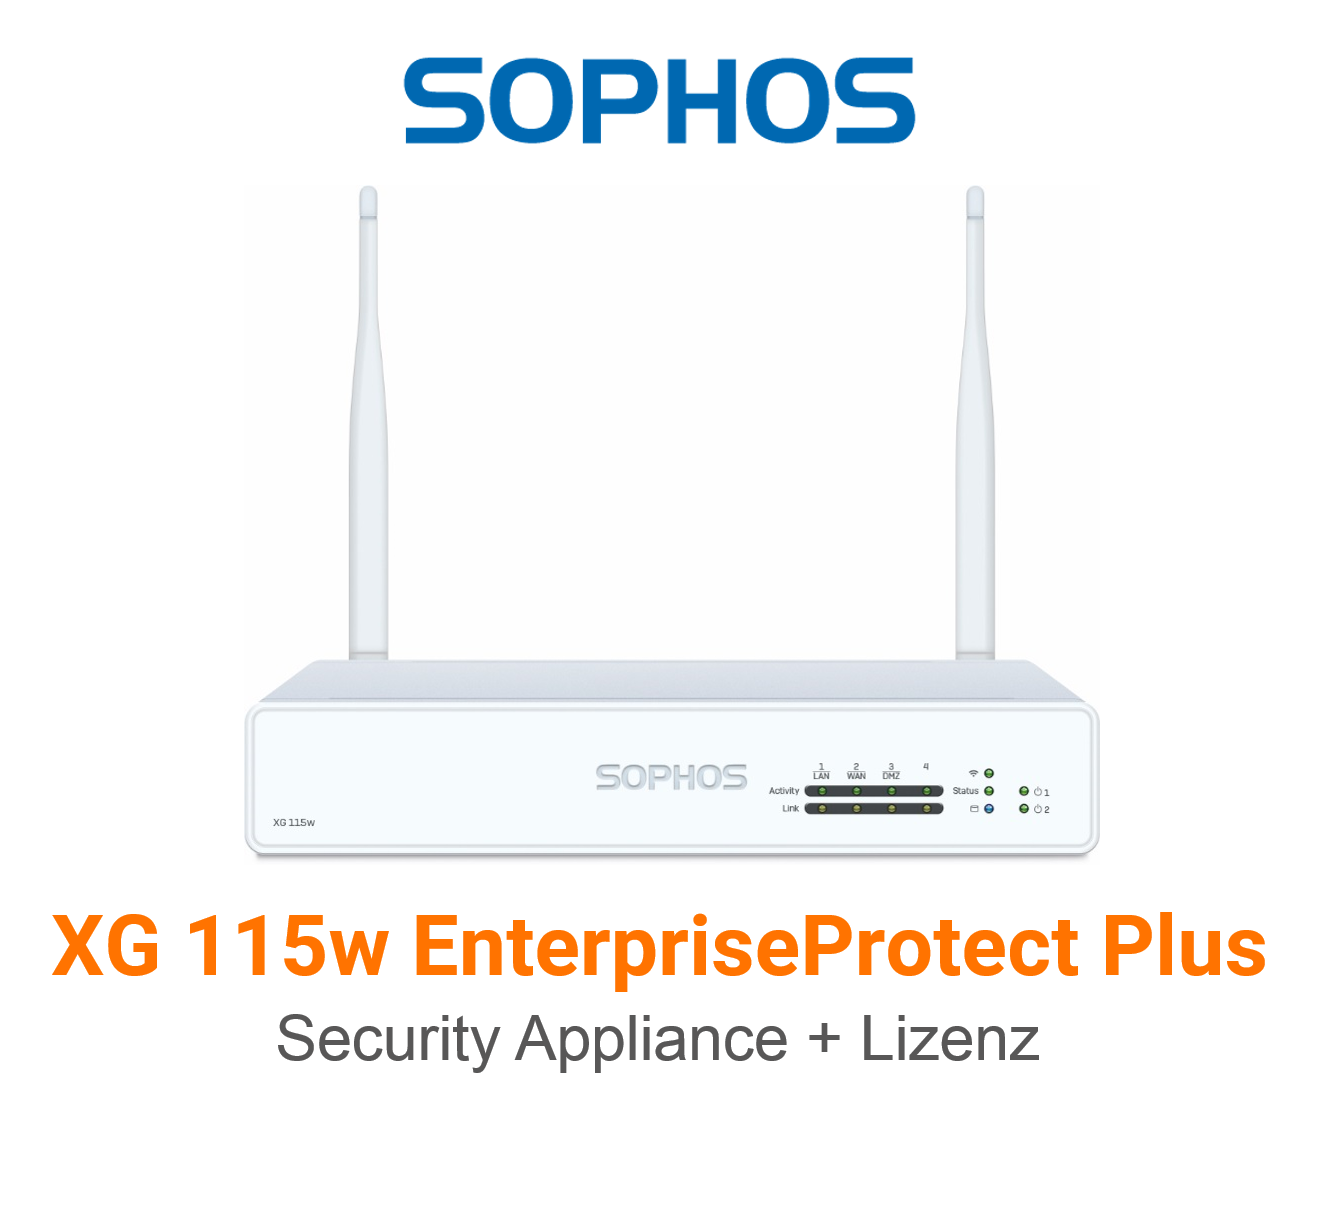 Sophos XG 115w EnterpriseProtect Plus Bundle (Hardware + Lizenz)